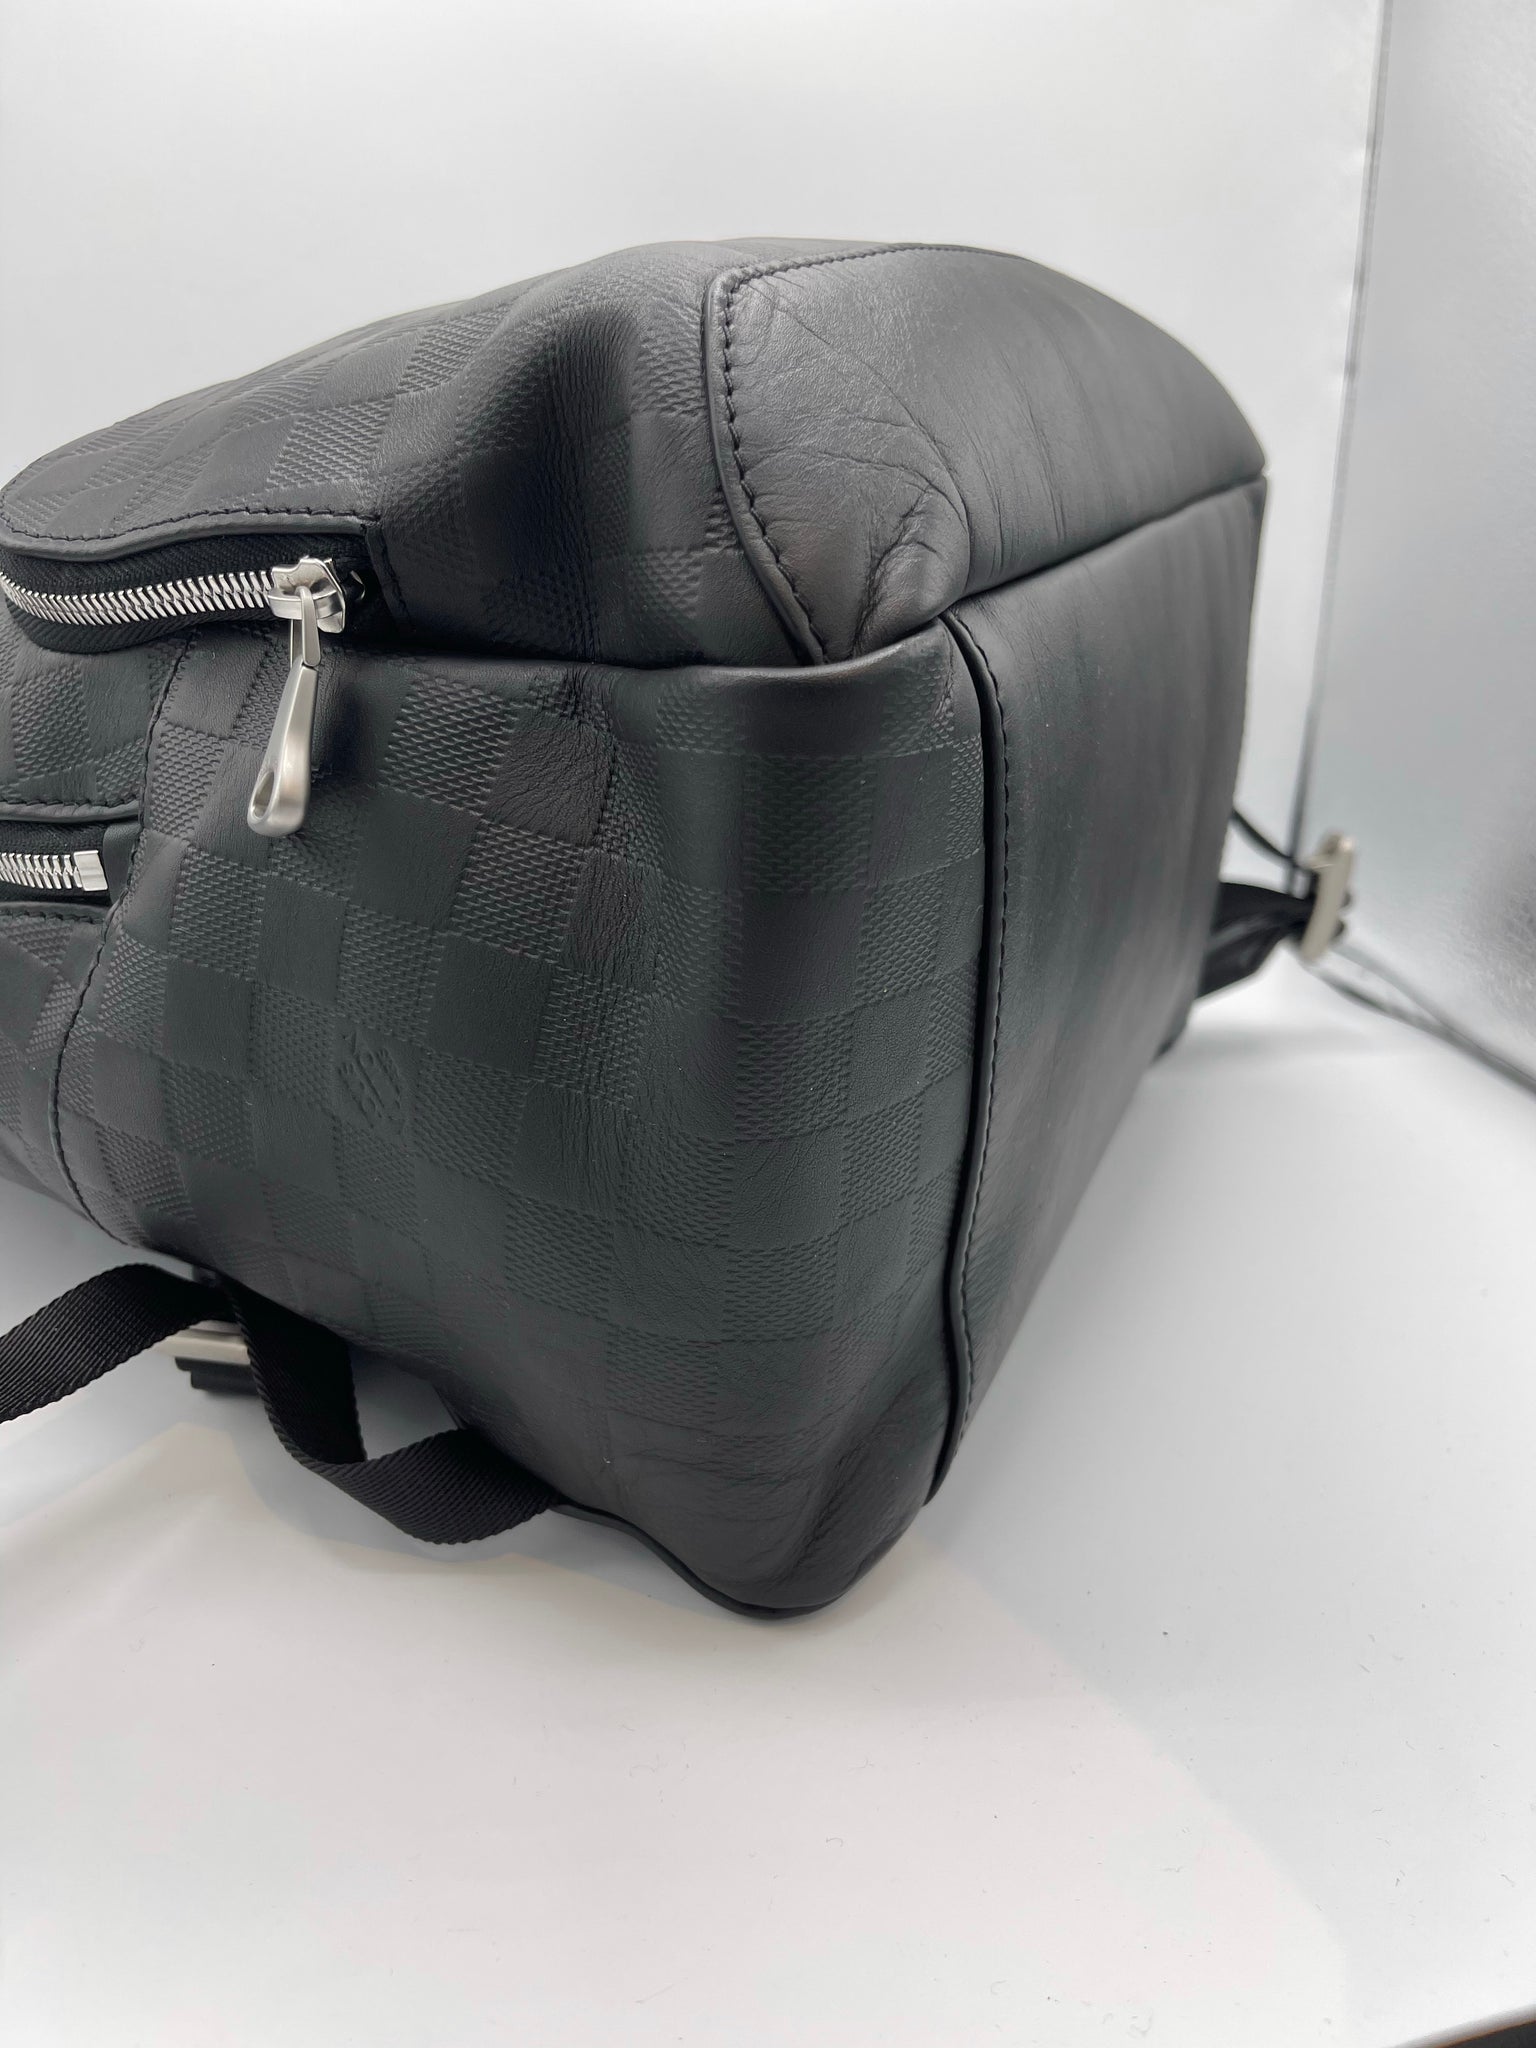 Shop Louis Vuitton DAMIER INFINI New pouch (N60450) by BeBeauty